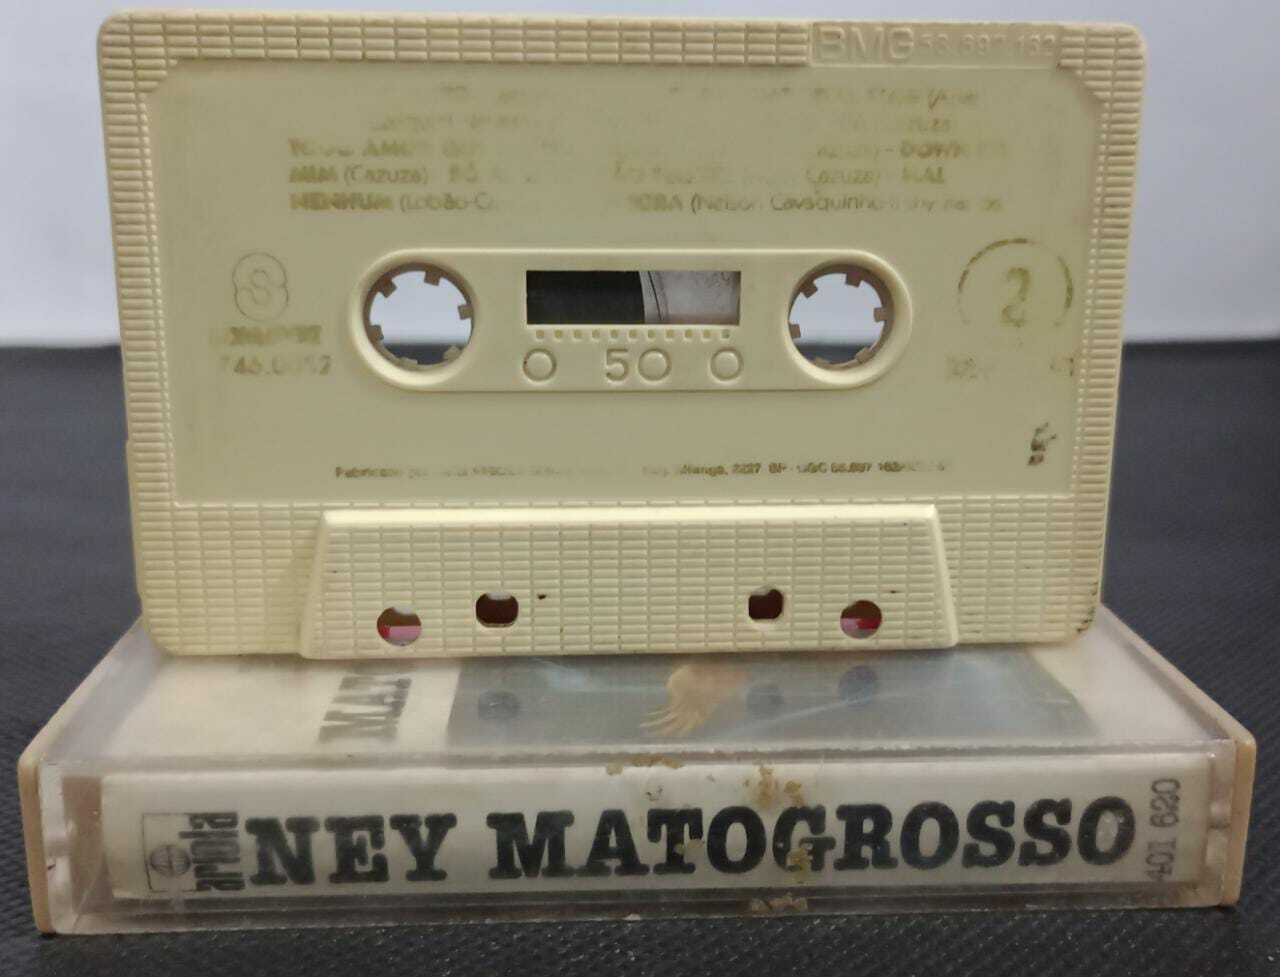 Fita K7 - Ney Matogrosso - 1981